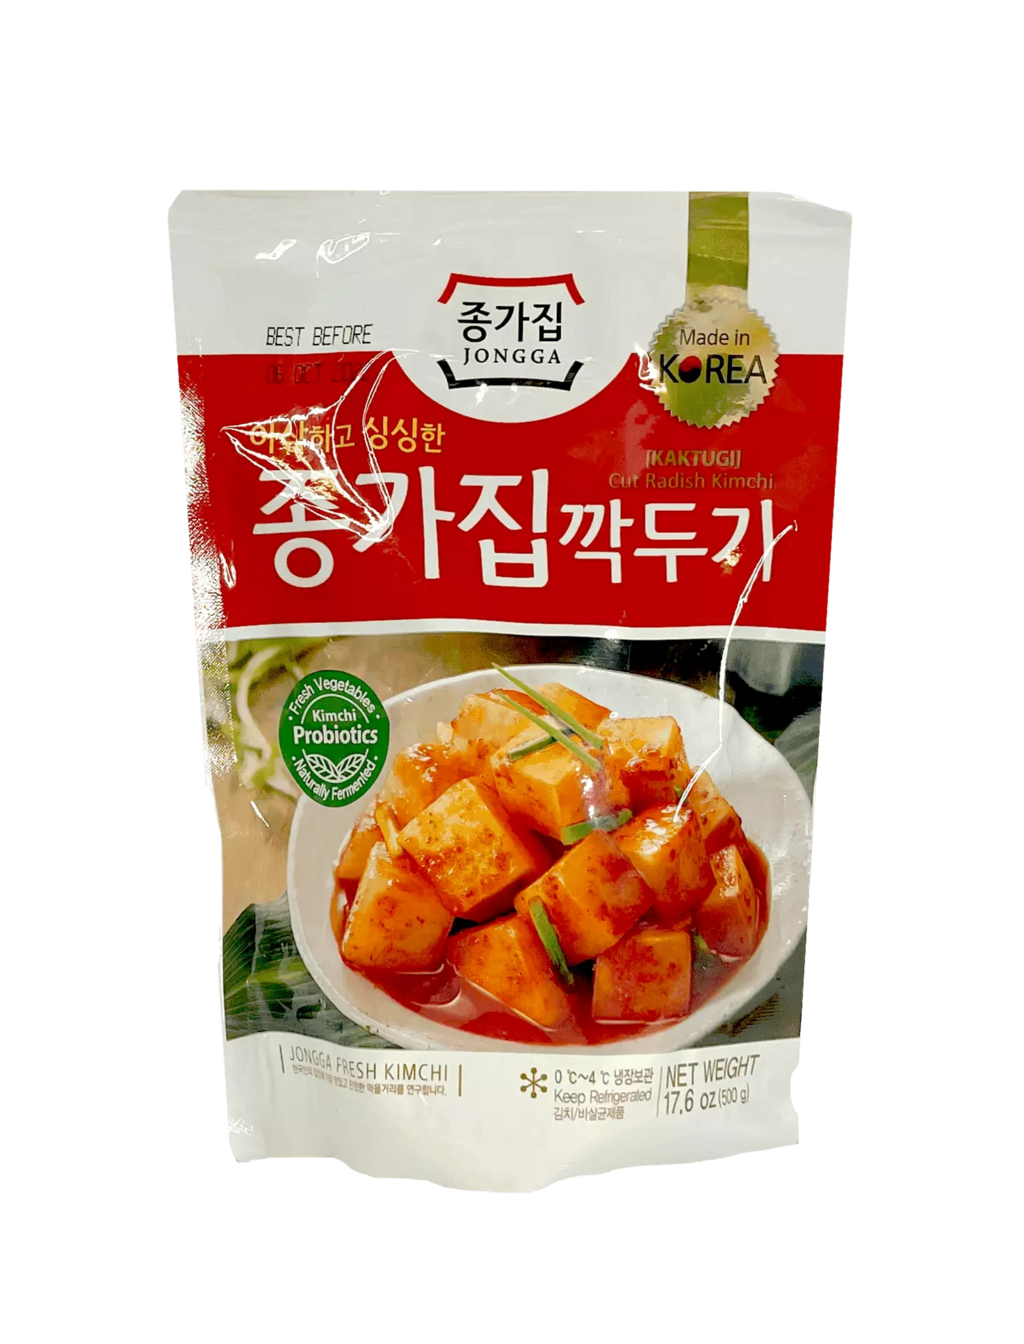 Chongga Kaktugi/Rättika Kimchi 500g Korea